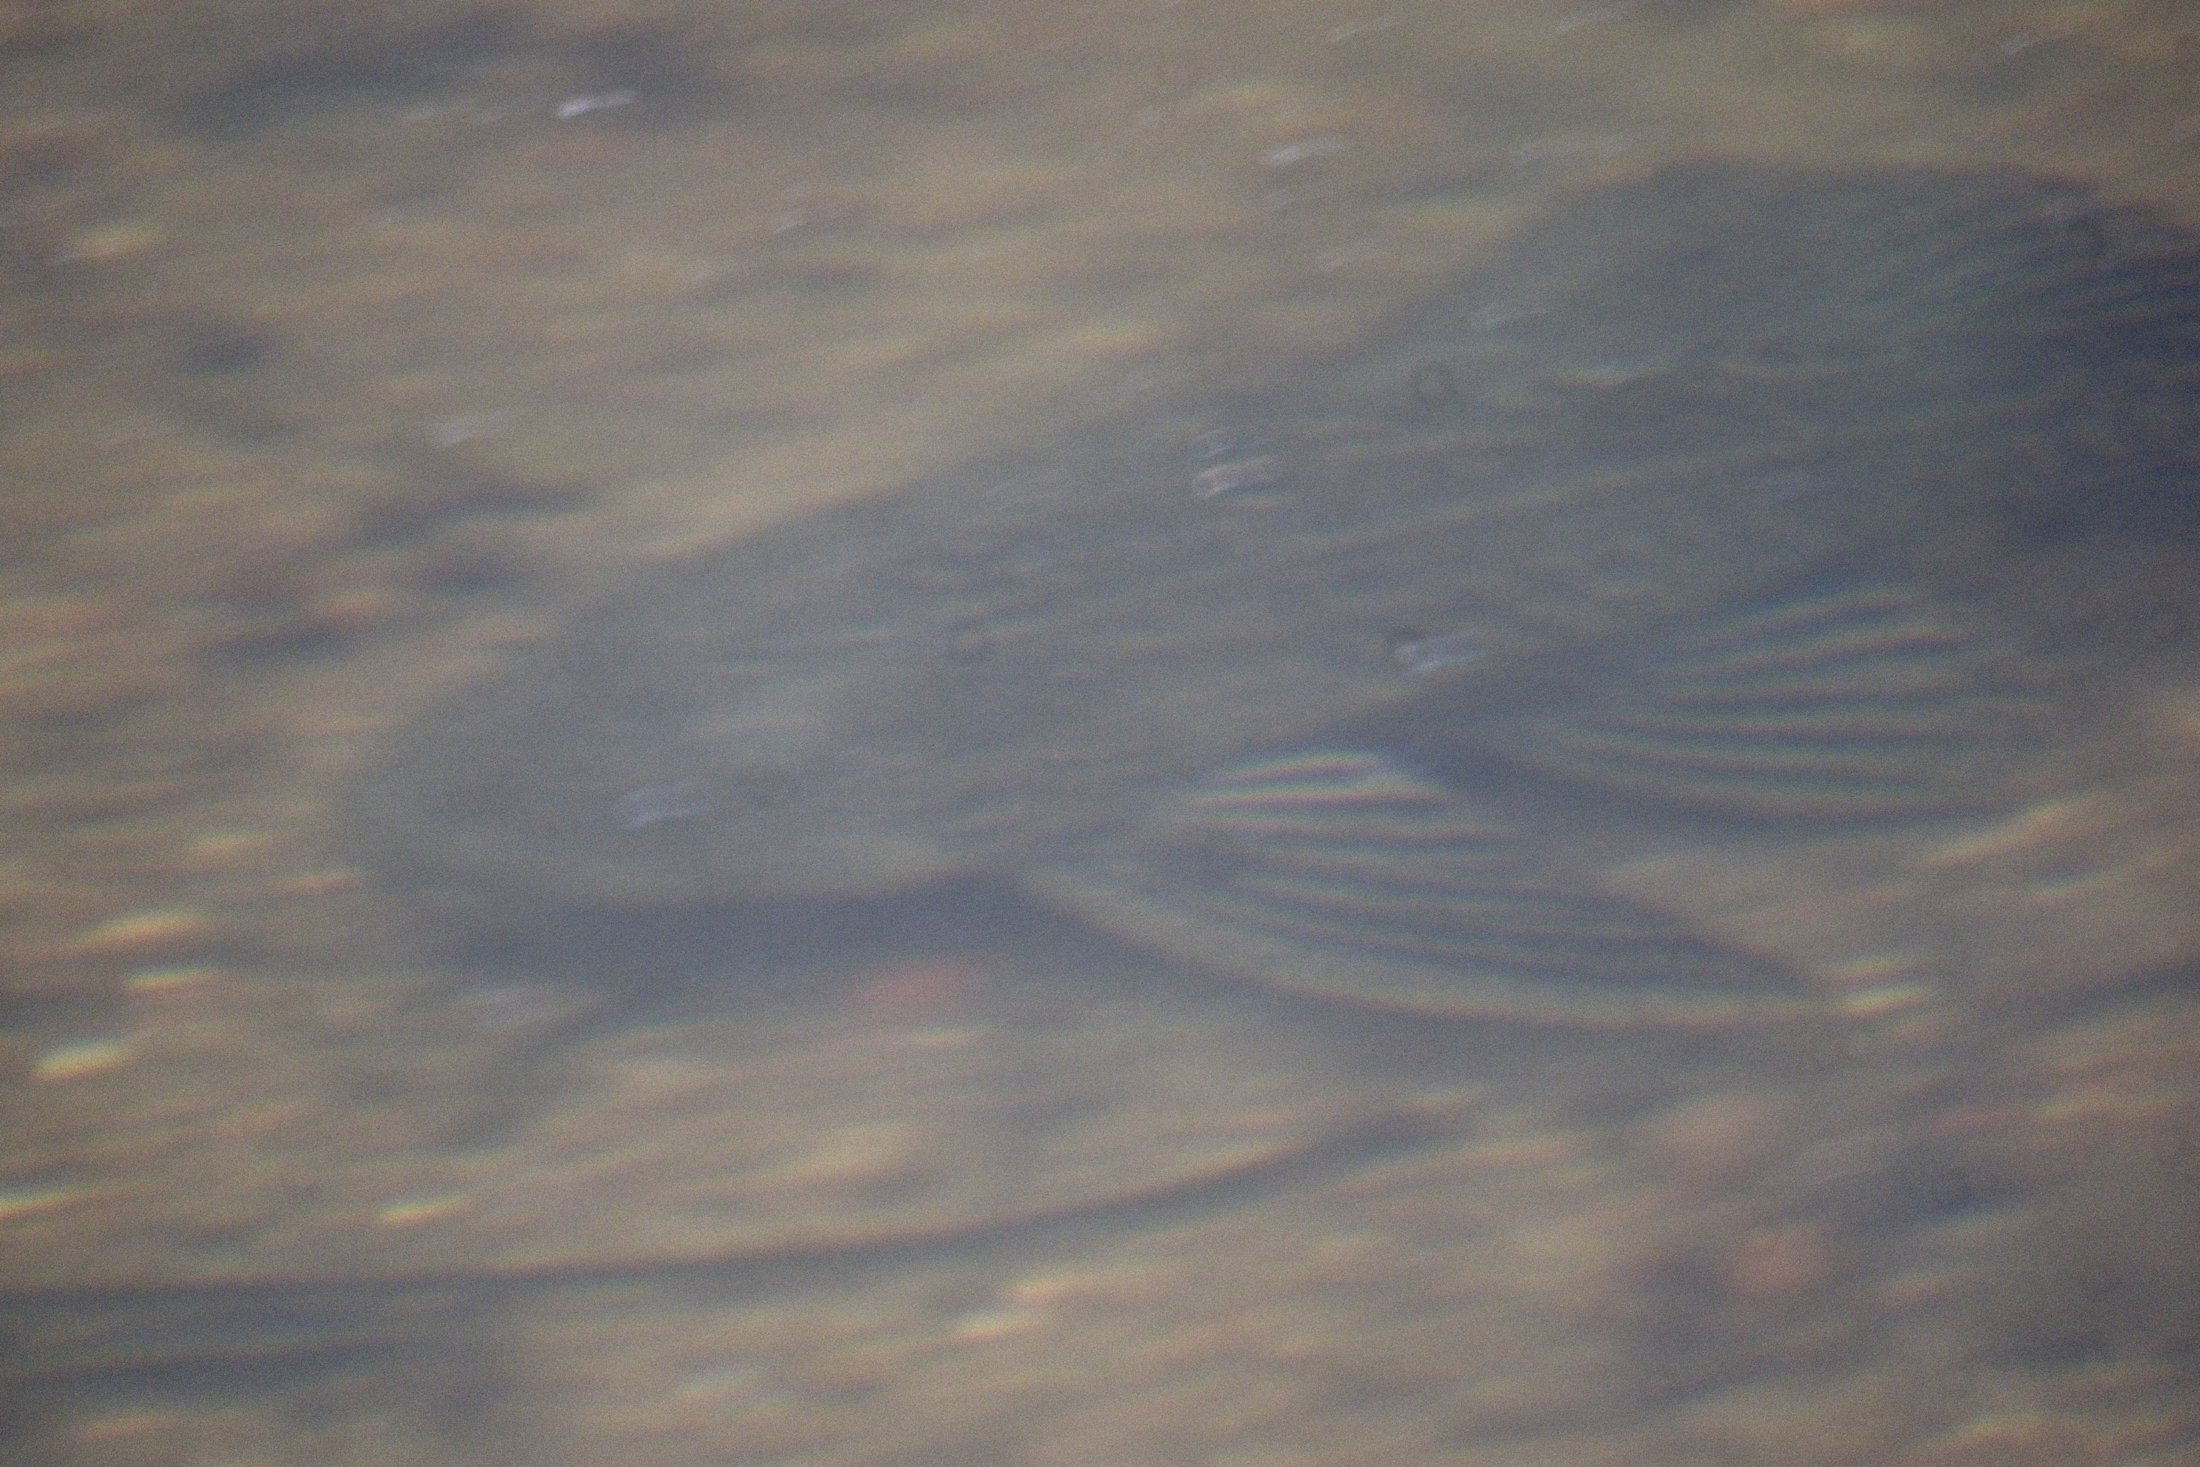 Fish in creek